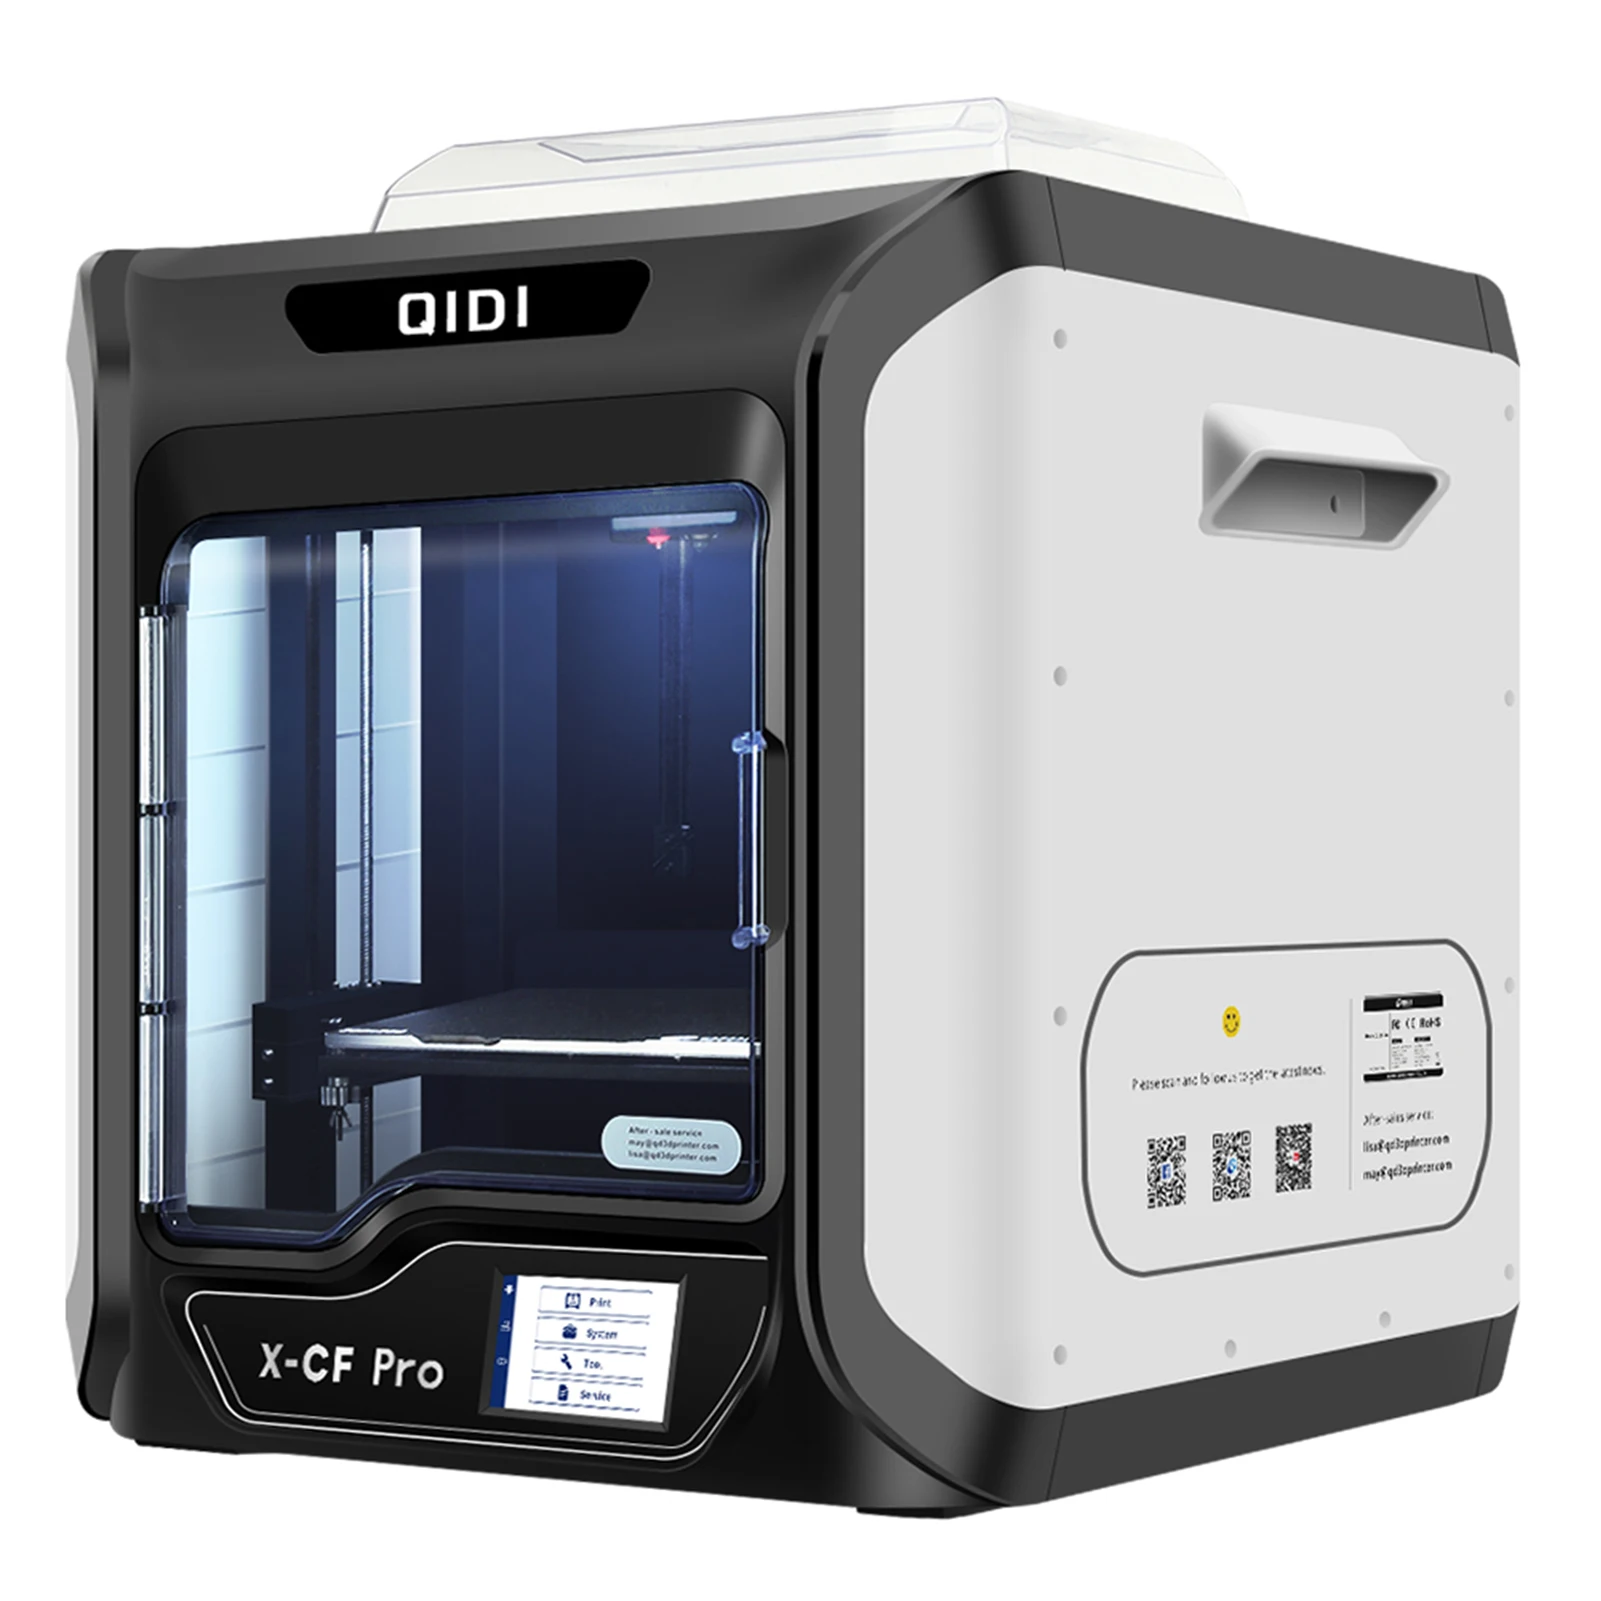 

QIDI TECH X-CF-Pro 3D Printer Desktop Intelligent Industrial Grade 5inch Touchscreen WiFi Printing Upgraded XYZ Structure Print